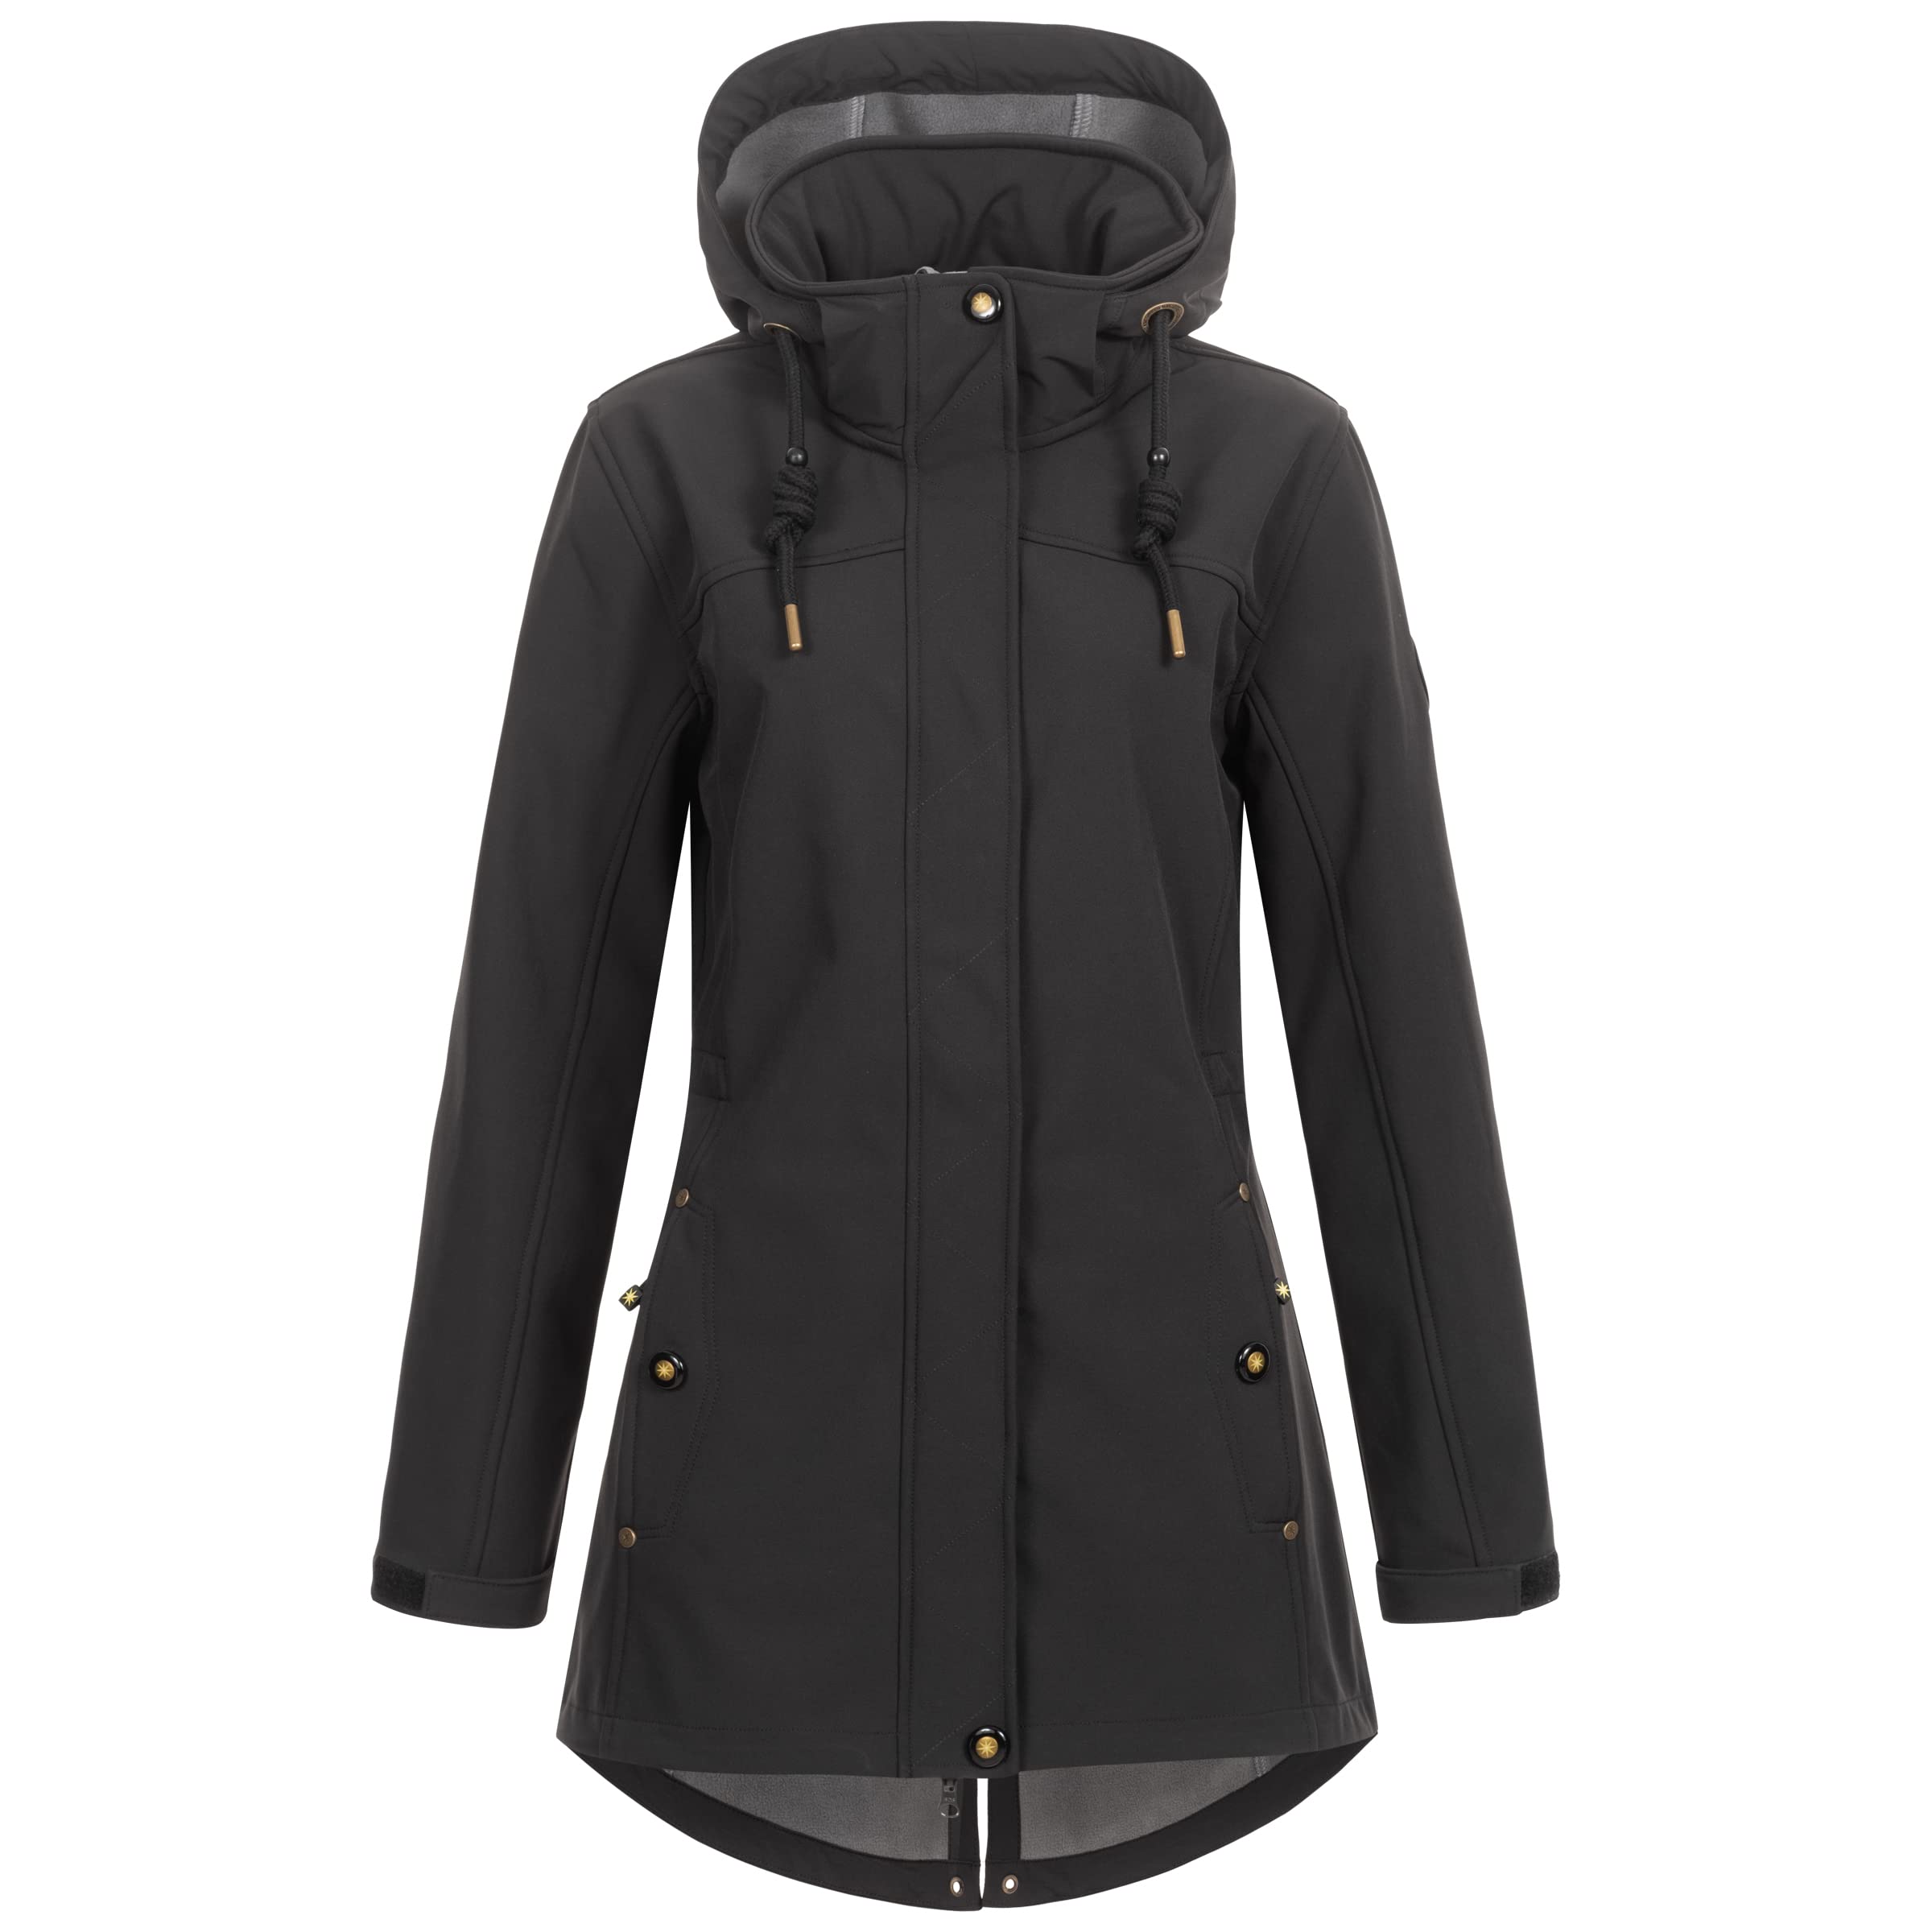 Seesternbrise Damen Women's Coat Short Coat With Hood Lined Jacket Transition Jacket #Anker Glutbree Softshelljacke, Schwarz, 42 EU